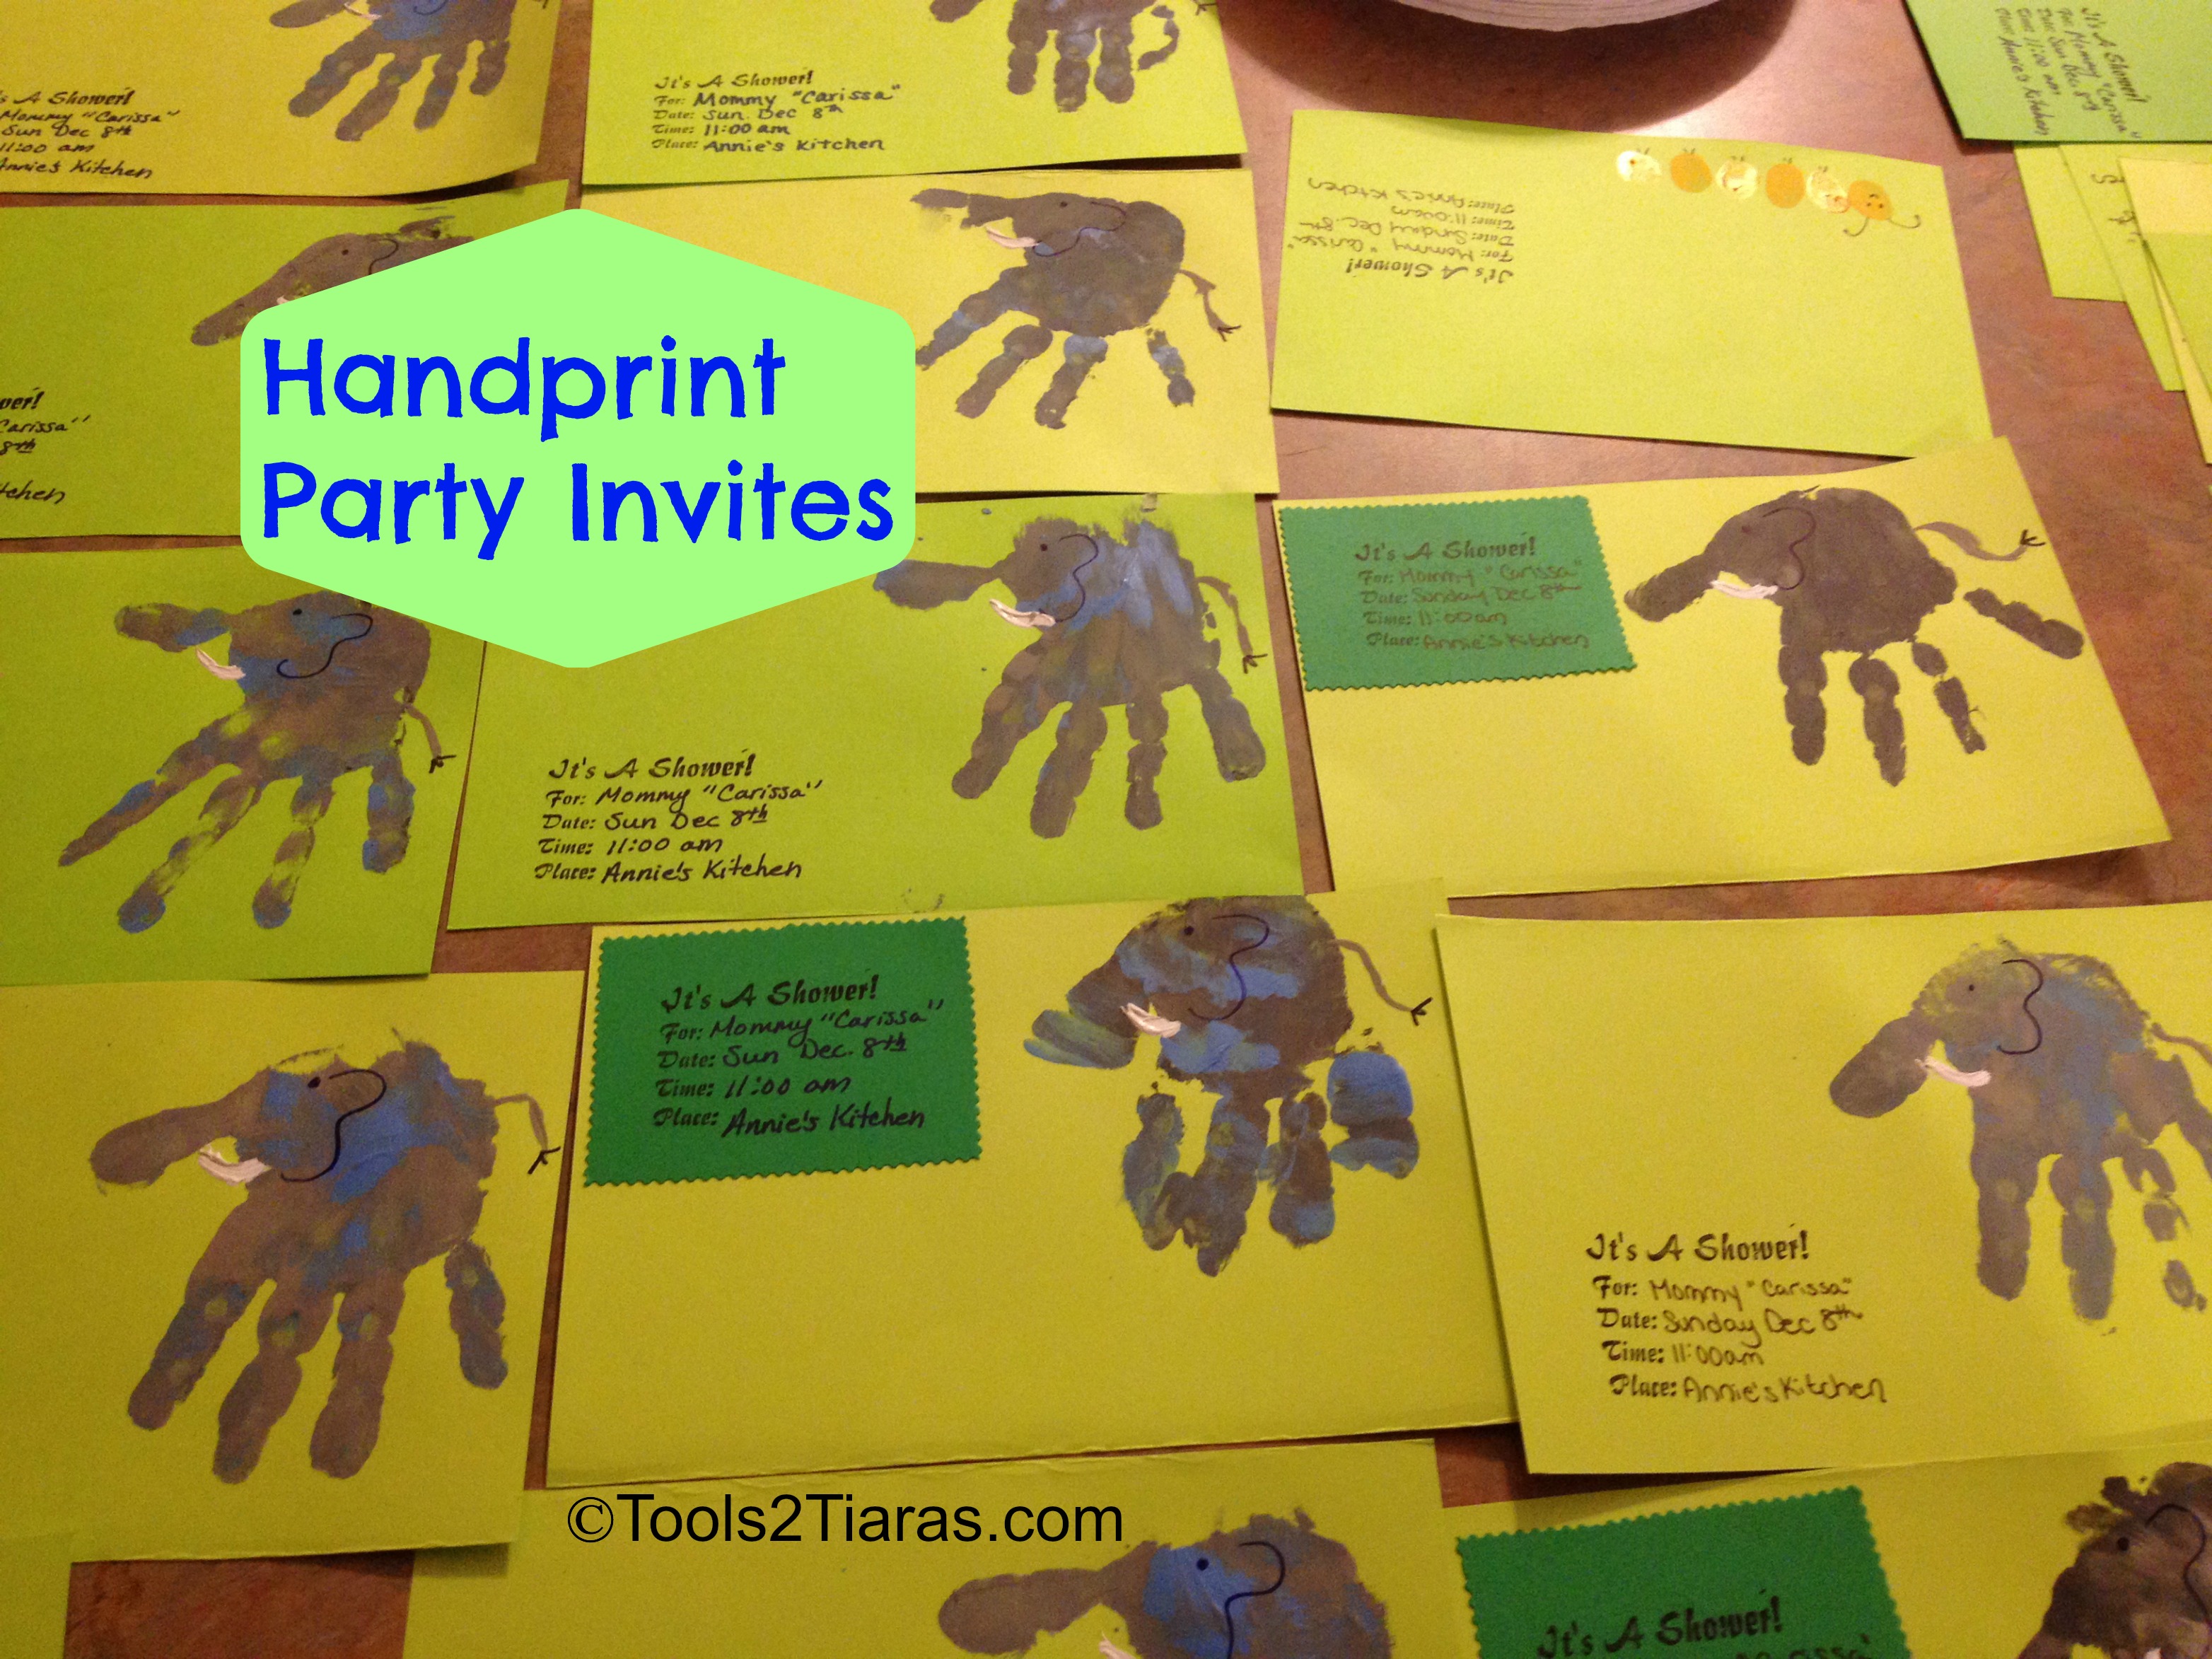 Handprint invites